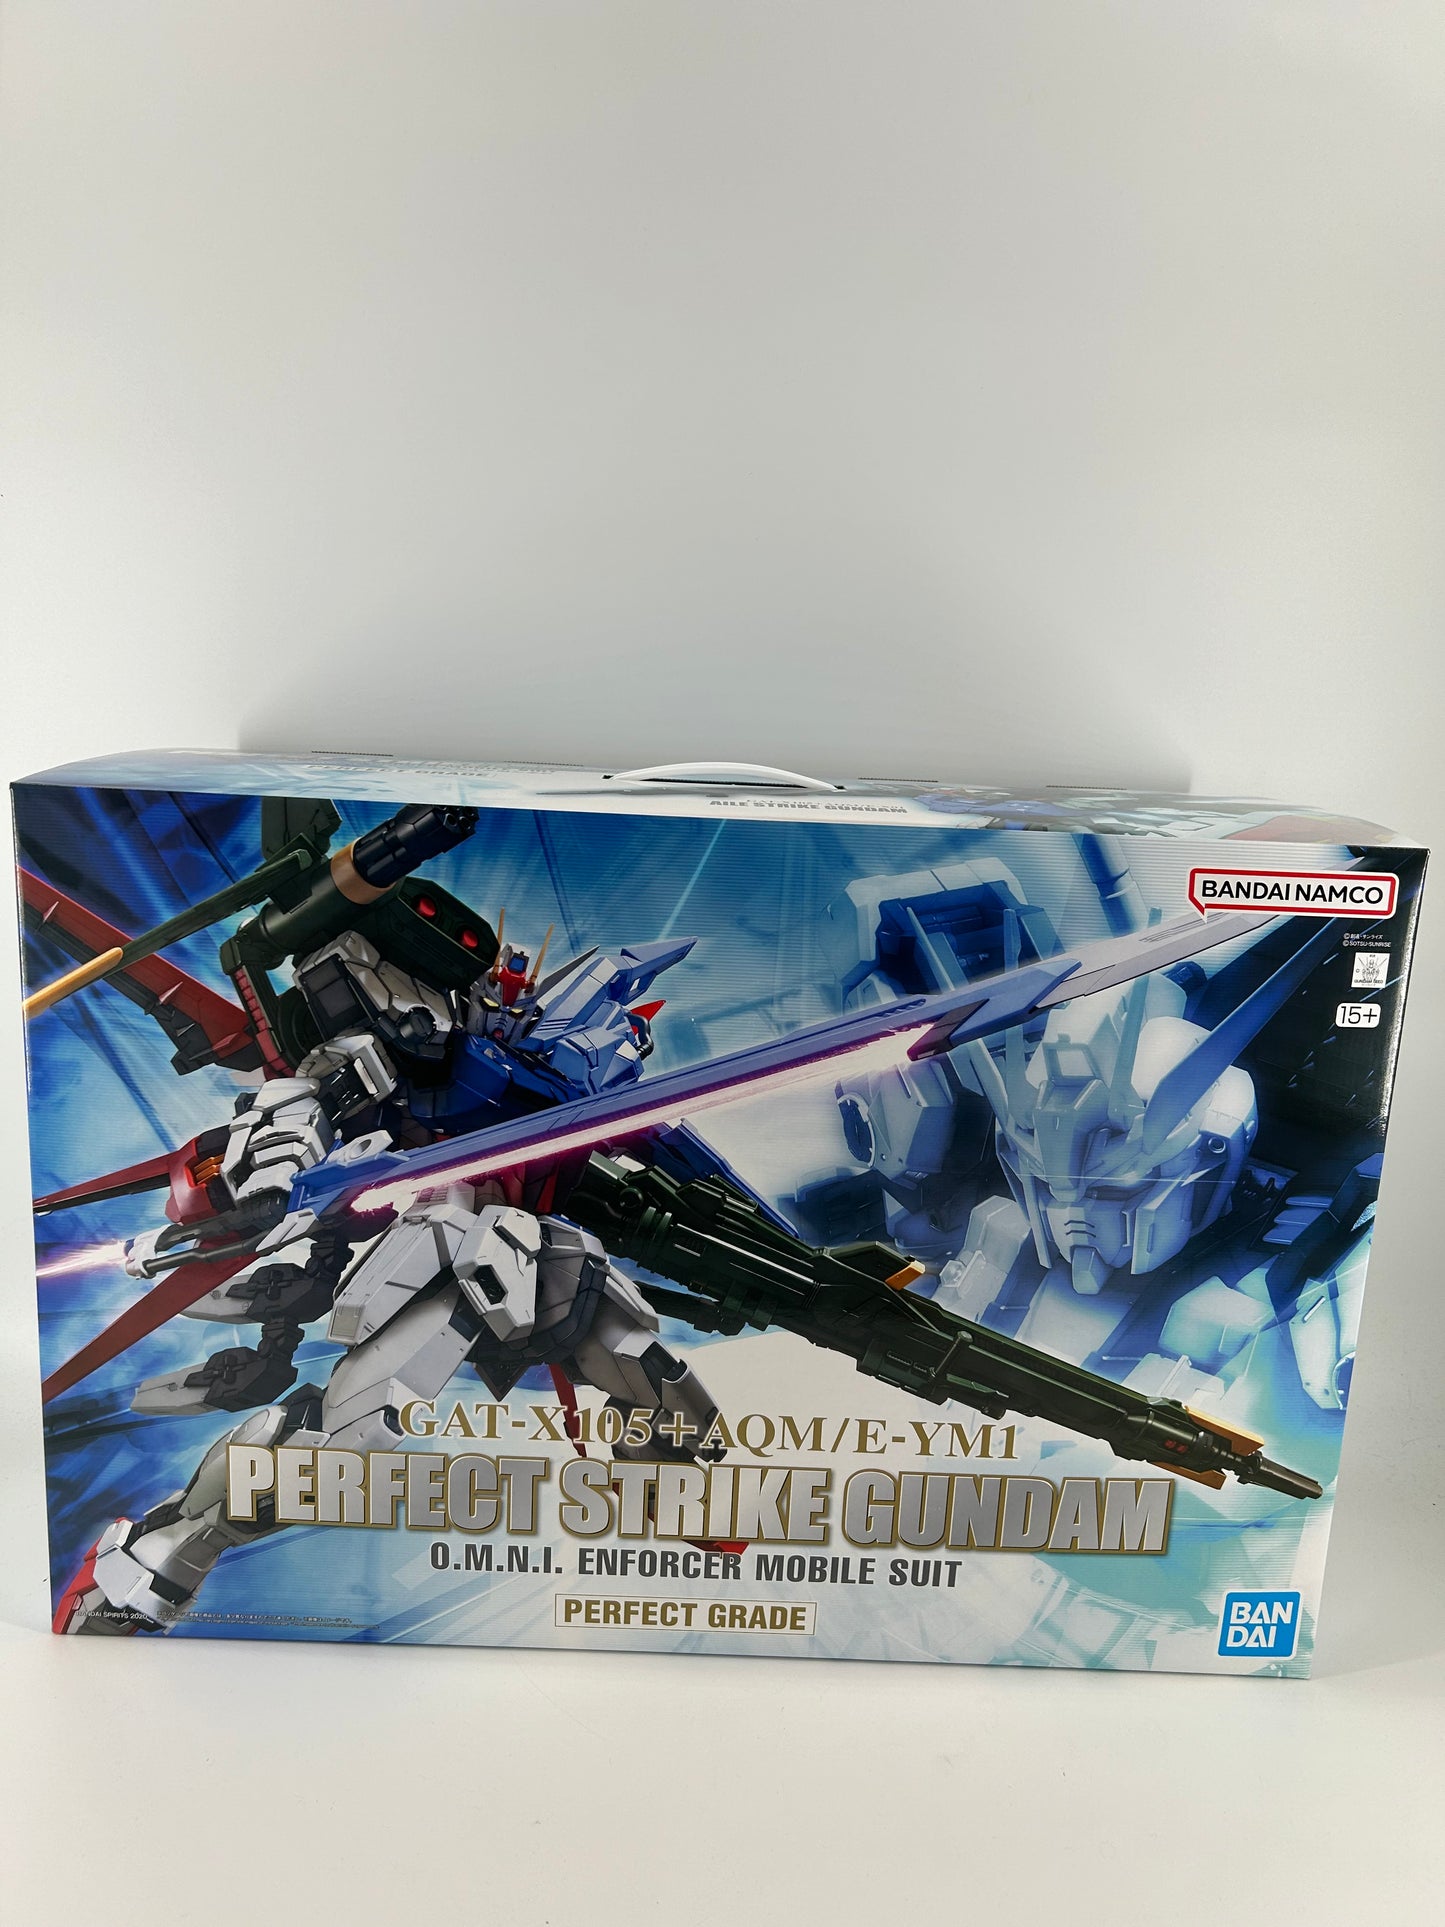 Perfect Strike Gundam O.M.N.I Enforcer Mobile Suit GAT-X105+AQM/E-YM1  (Perfect Grade)